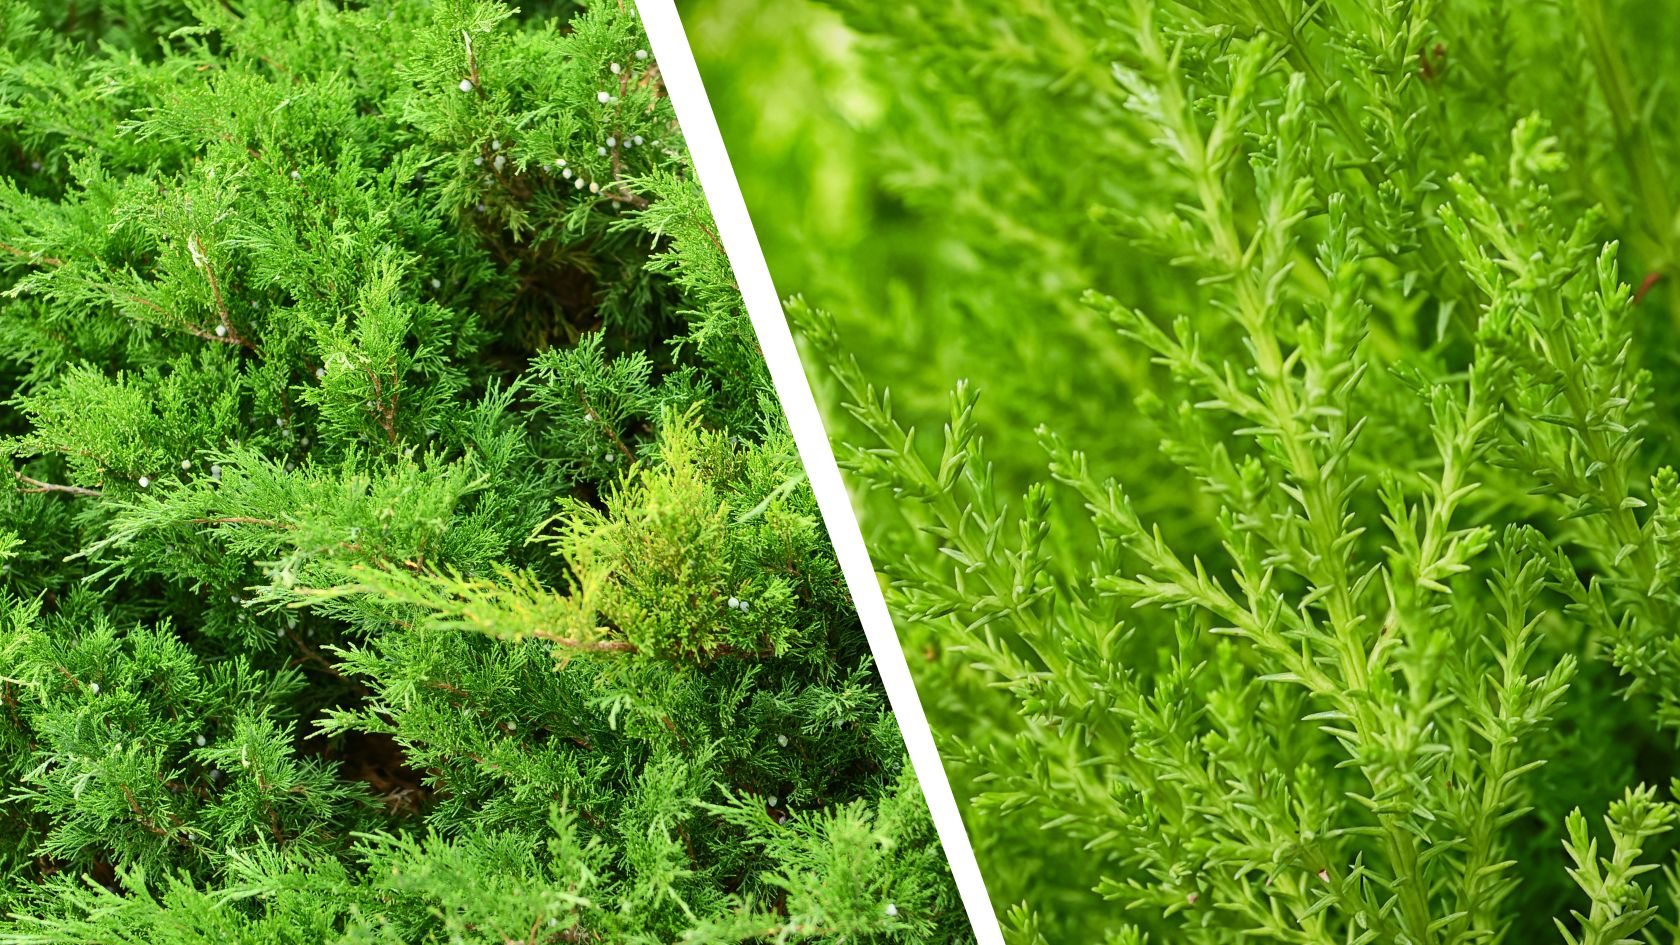 Juniper vs. Lemon Cypress - Evergreen Comparison and Care Tips